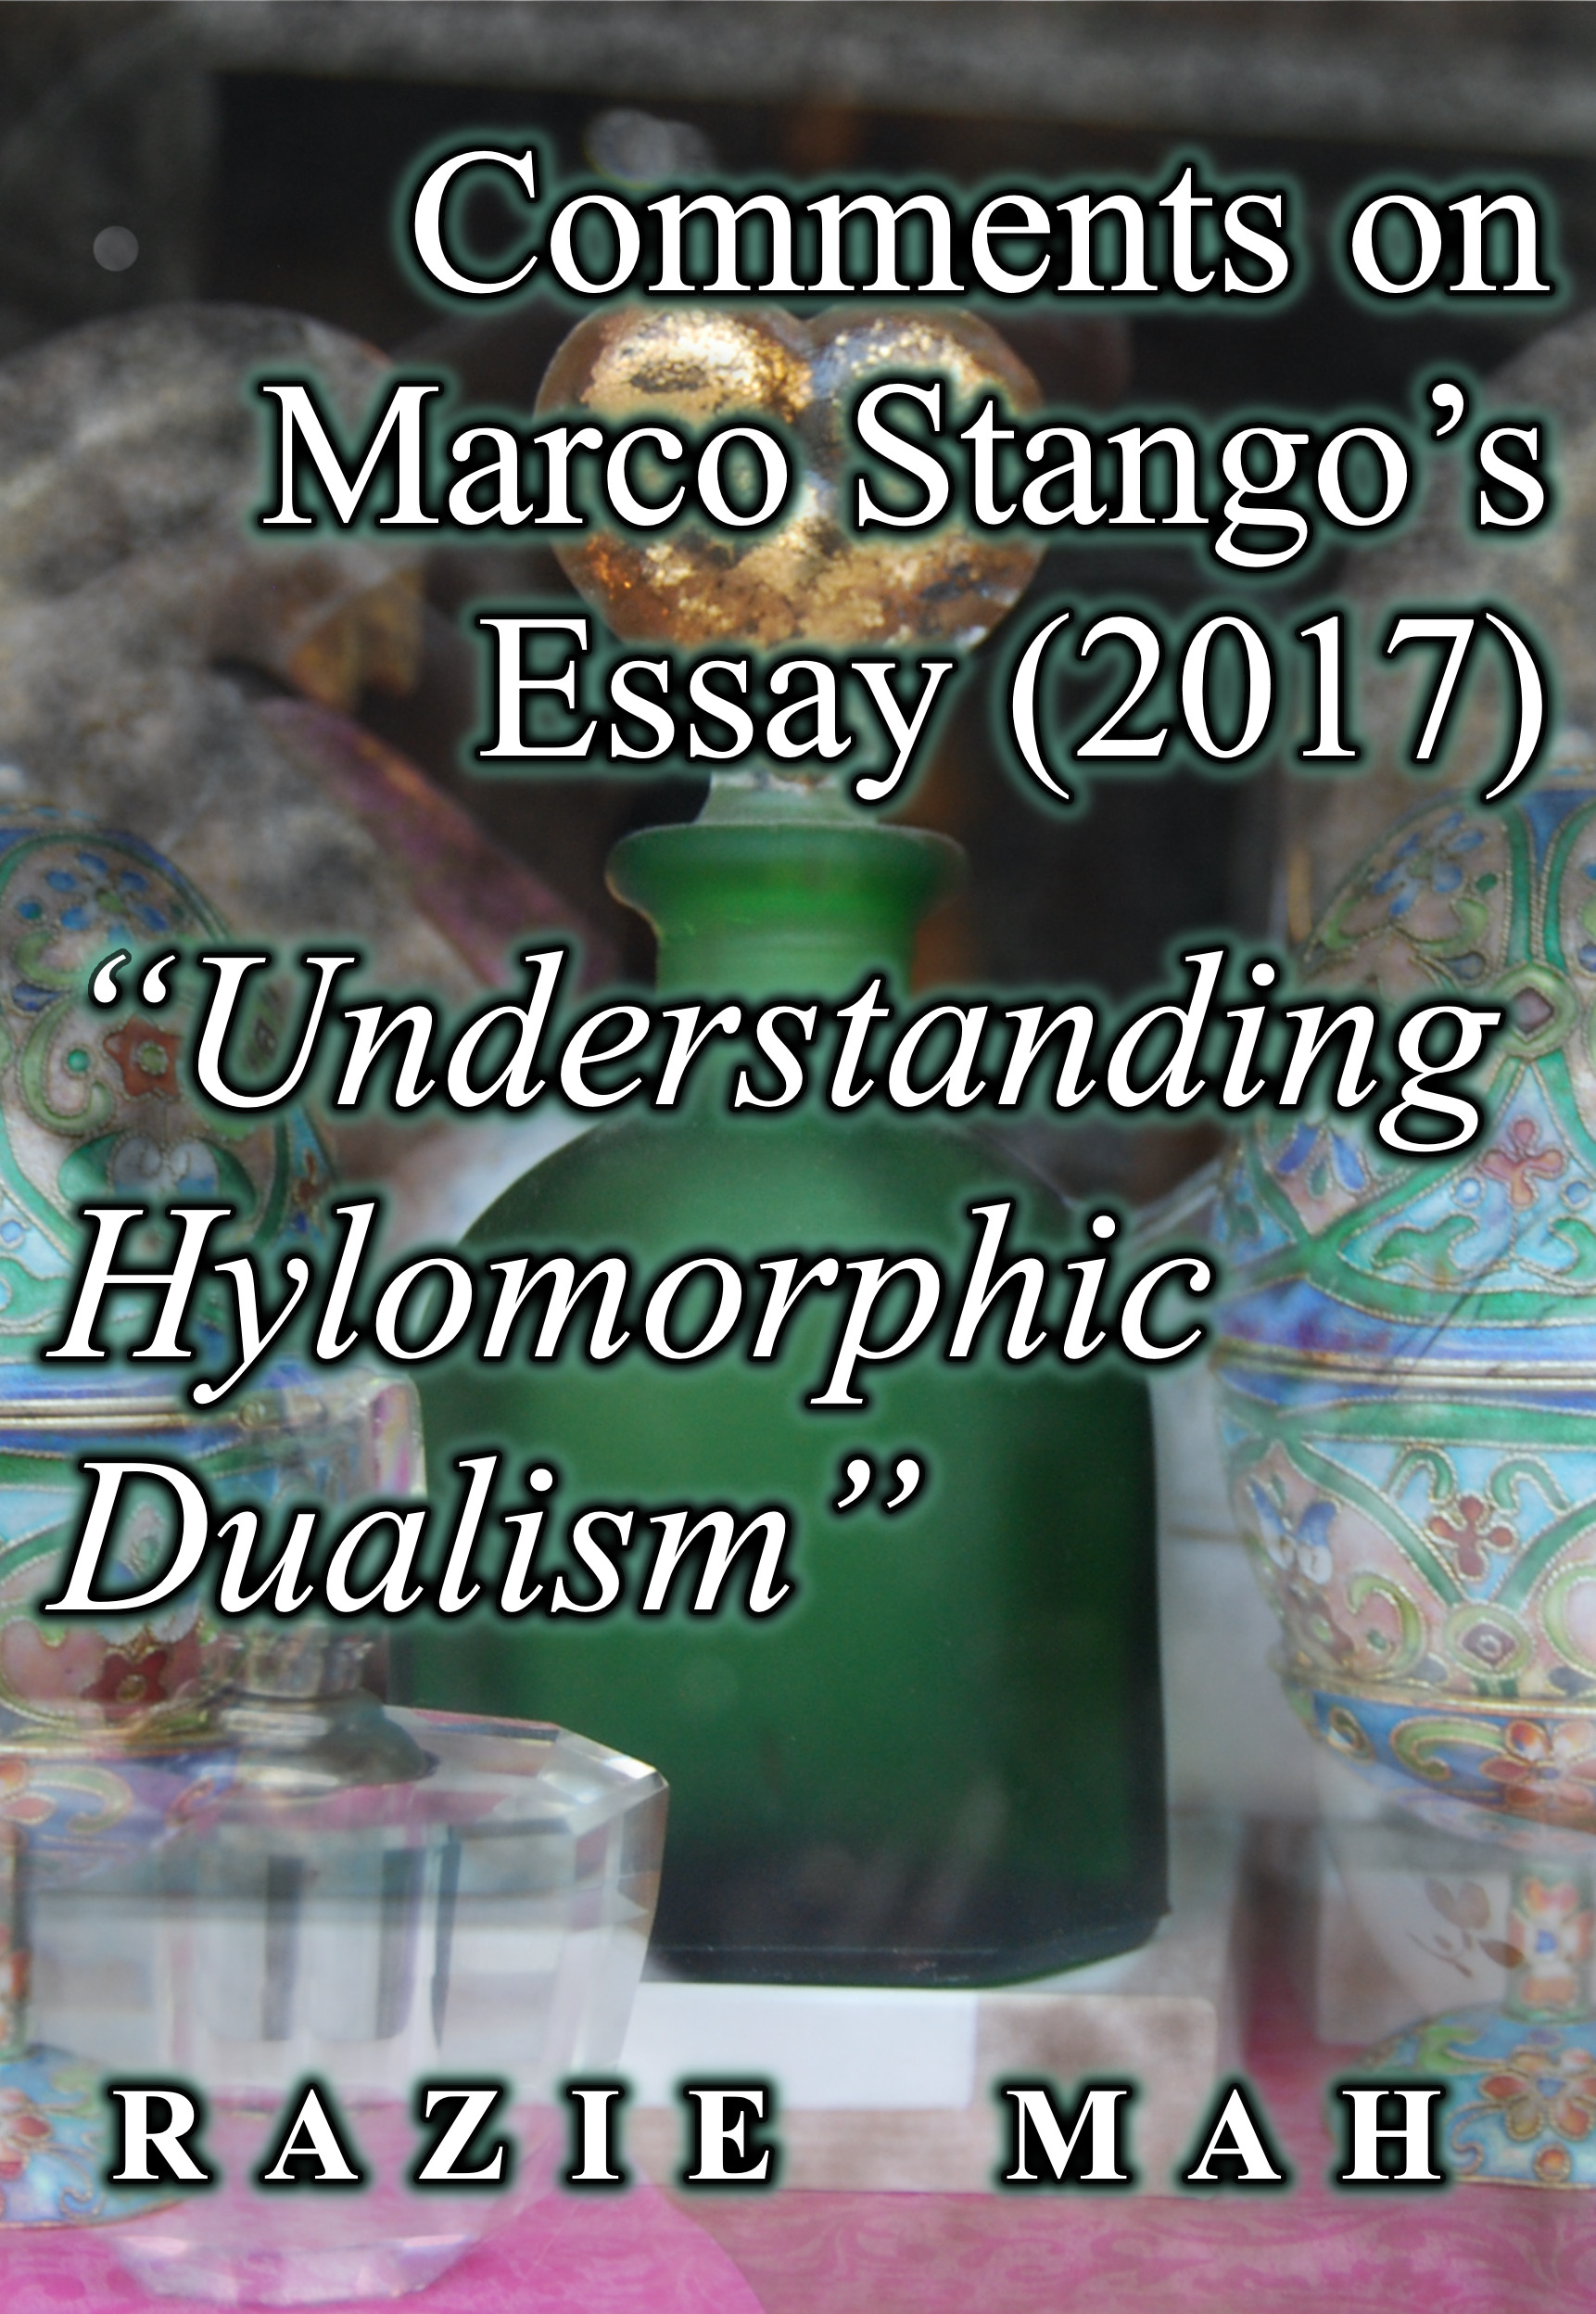 dualism philosophy essay